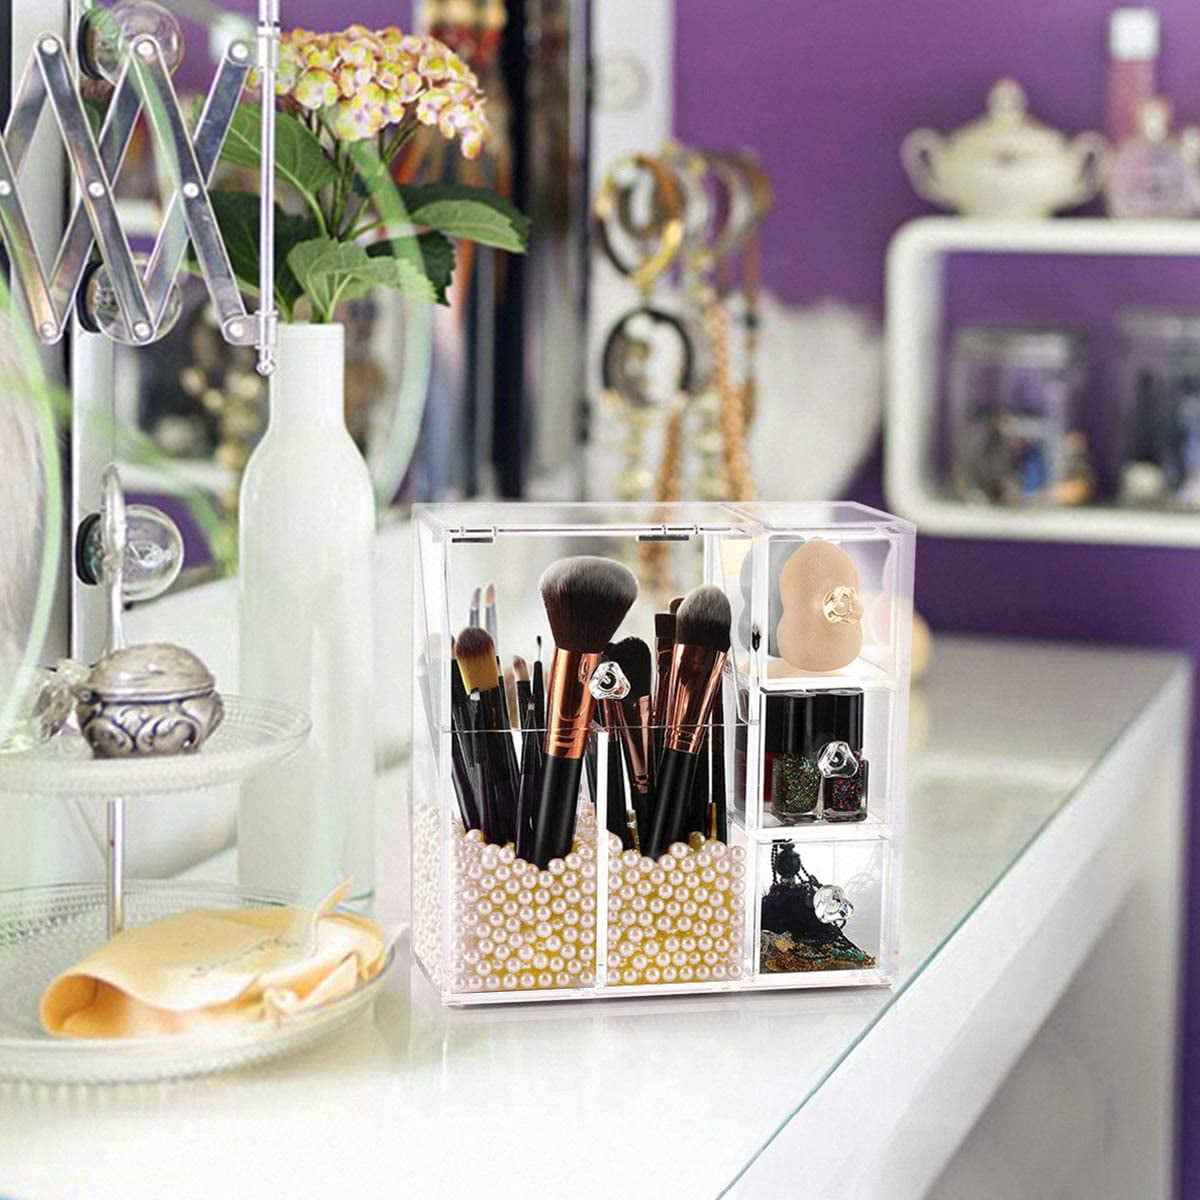 Li HB Store Travel Makeup Brush Holder With Magnet Closure - Silicone  Makeup Brush Case, Cute - Portable Makeup Brush Organizer - (Pink, Khaki,  Gray, Beige),Storage Bag,Beige 